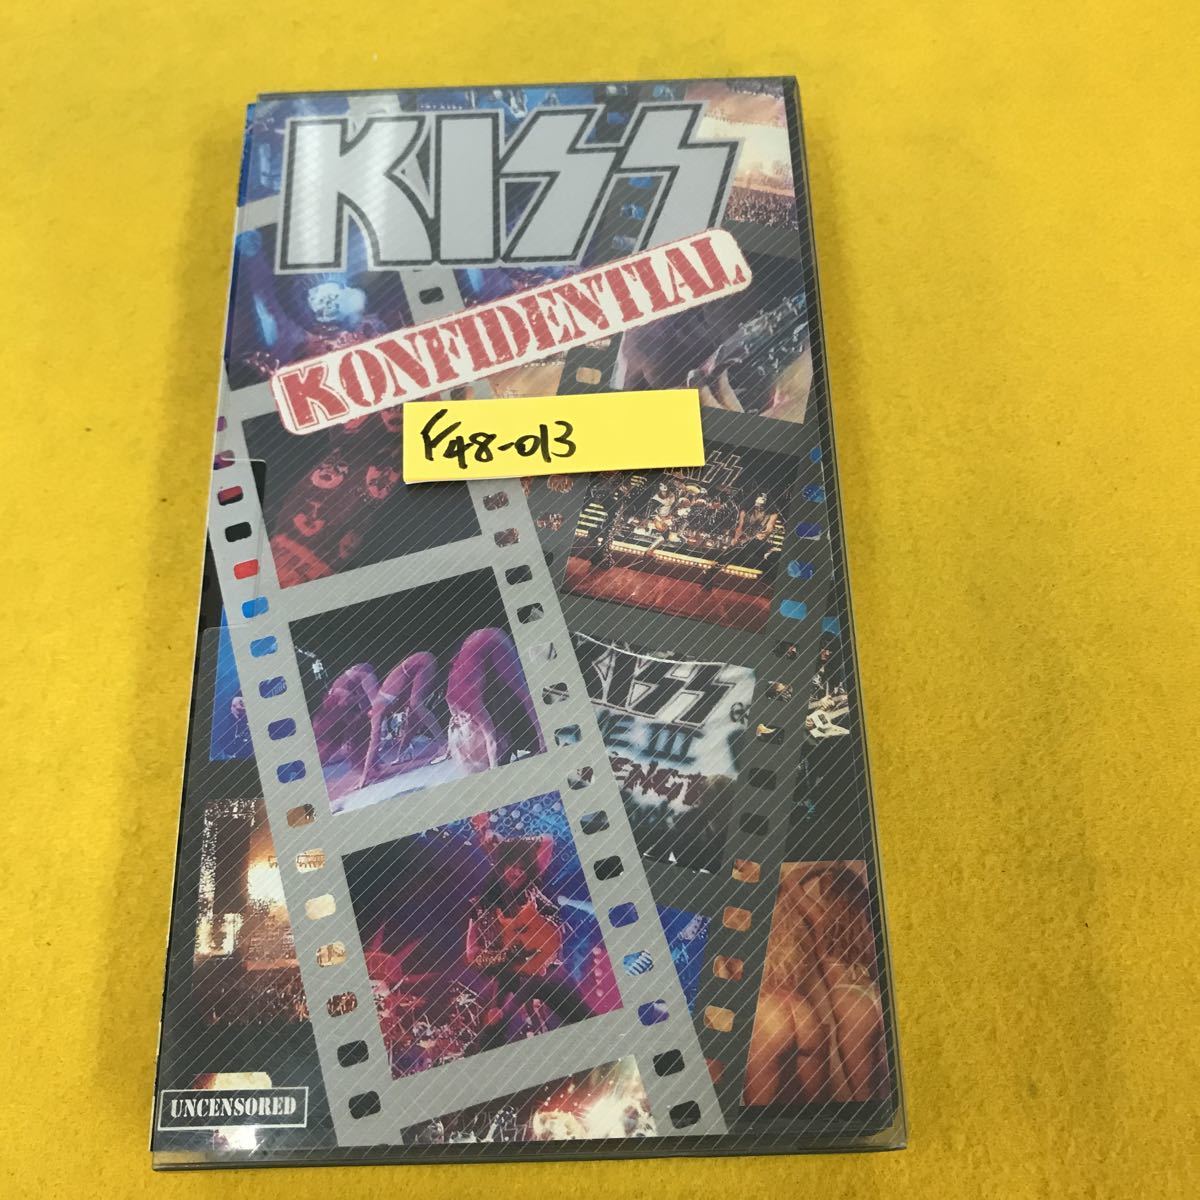 F48-013 KISS コンフィデンシャル KISSアライブⅢ VHS 歌詞・解説付 表紙破れ有り